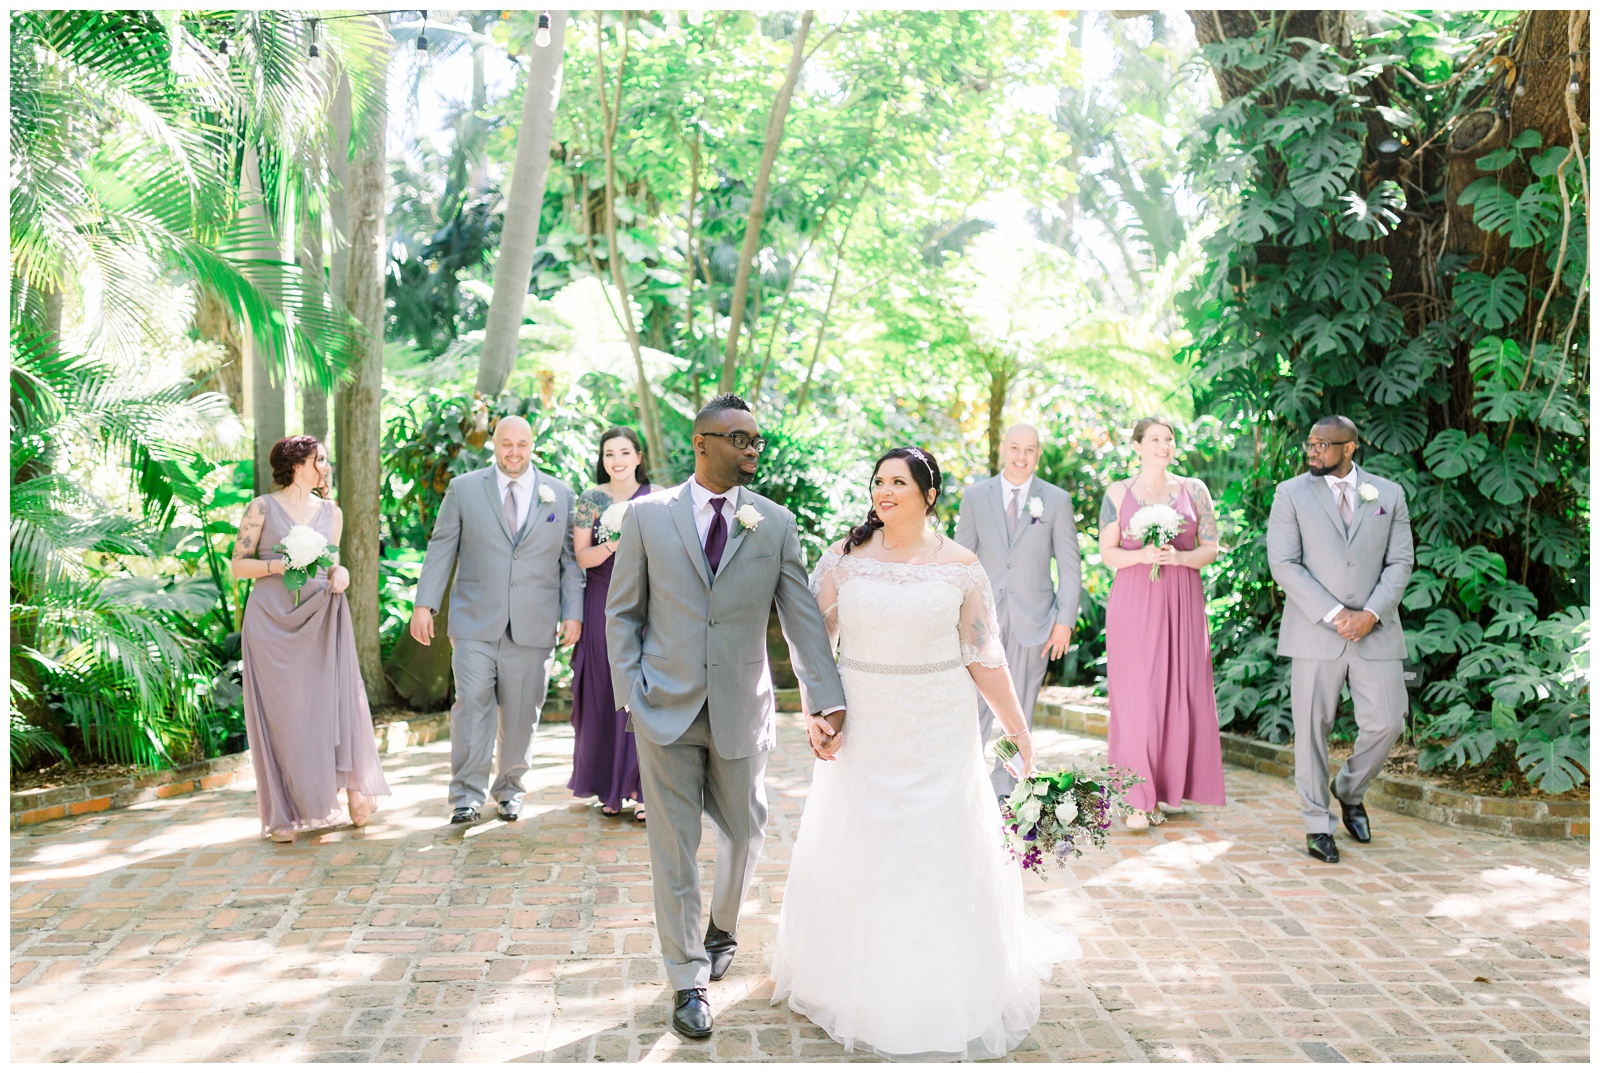 Sunken Gardens Wedding - Matlock and Kelly